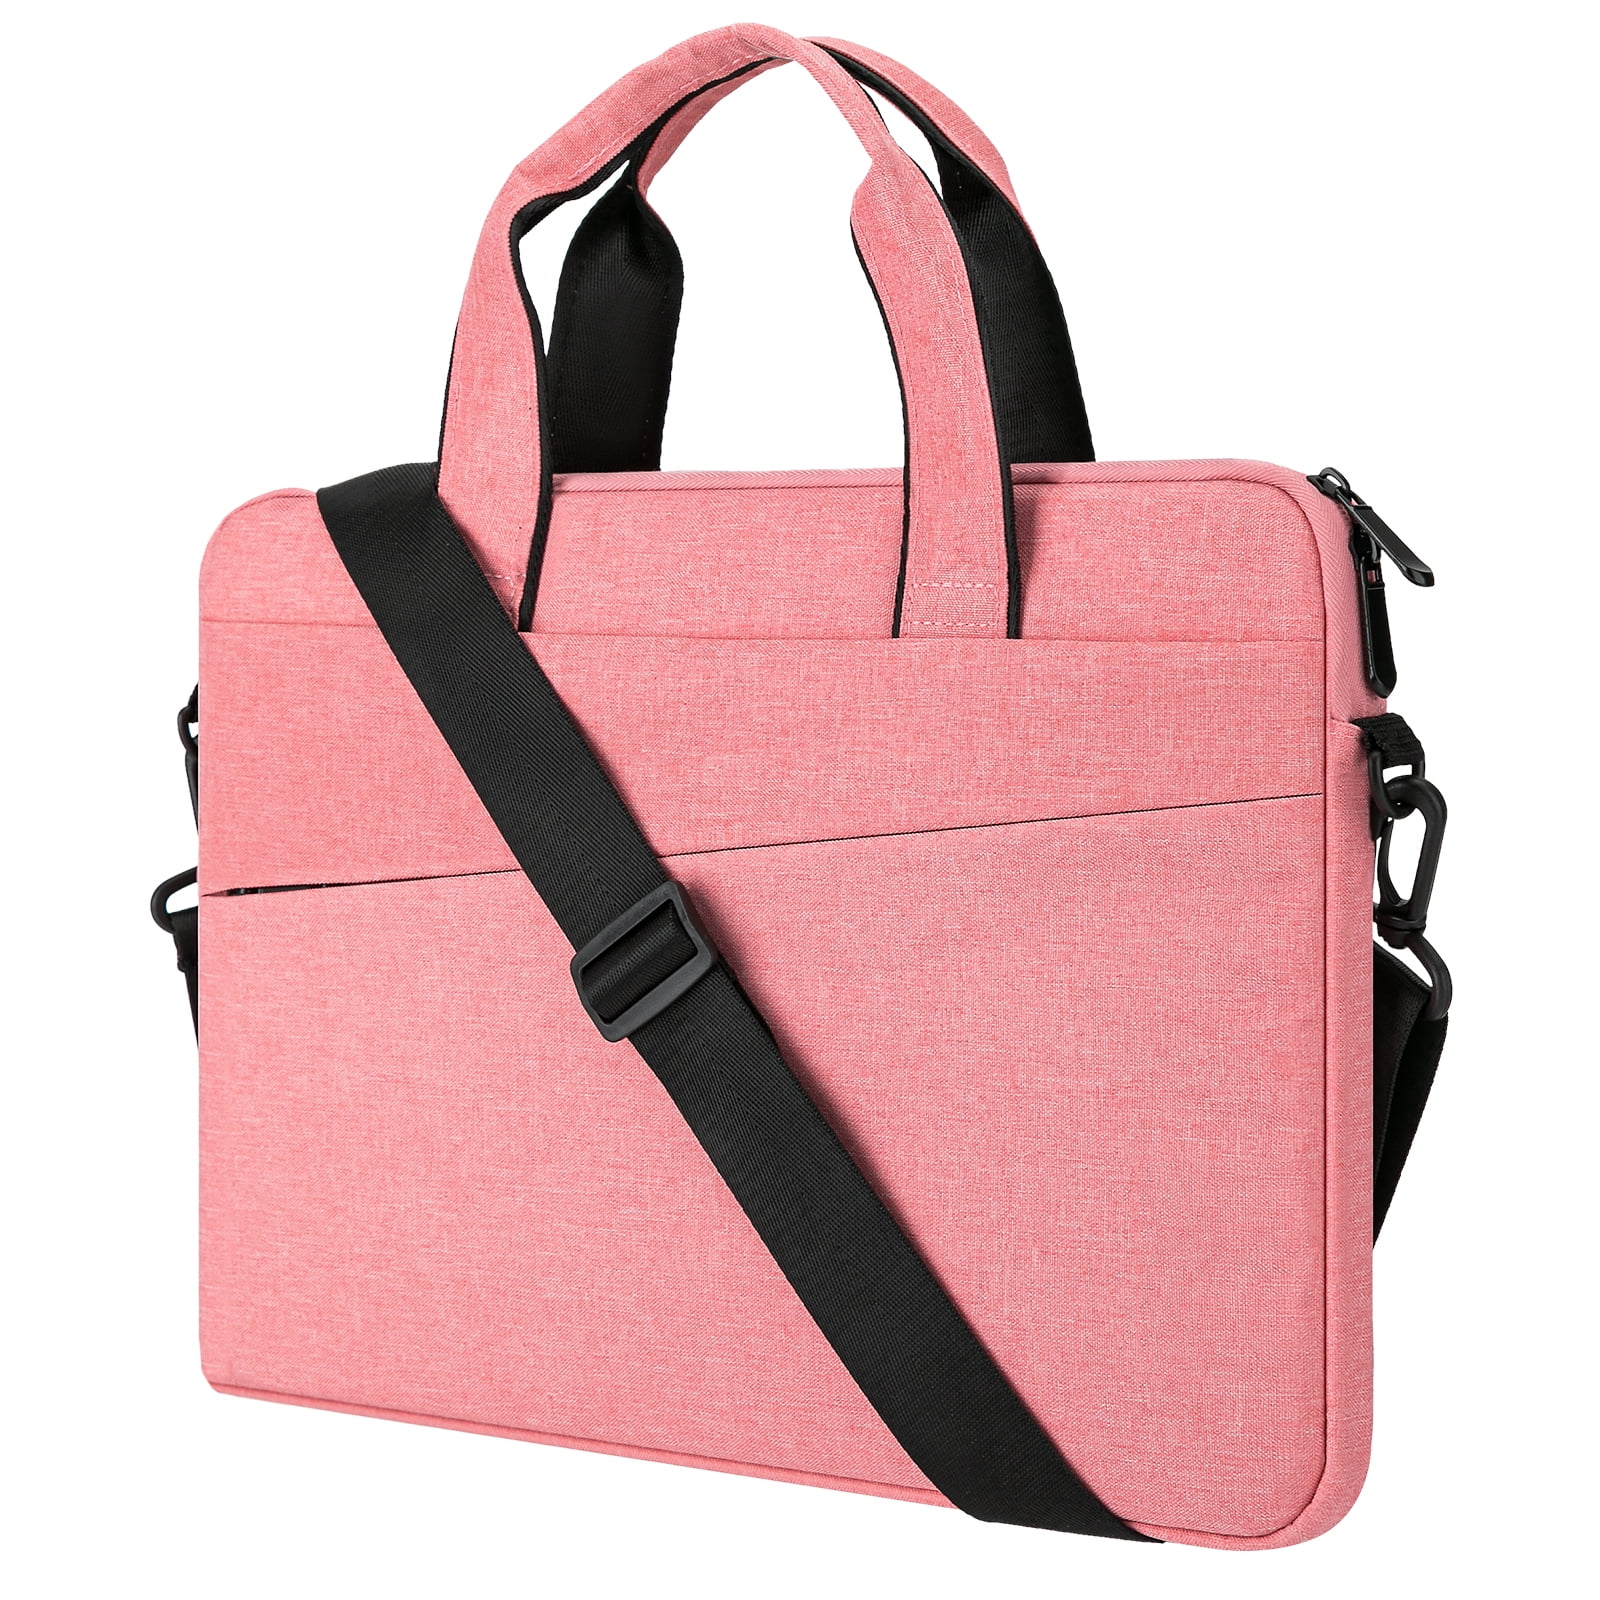 LLAYOO 14 Inch Laptop Sleeve Shoulder Bag Compatible with 14